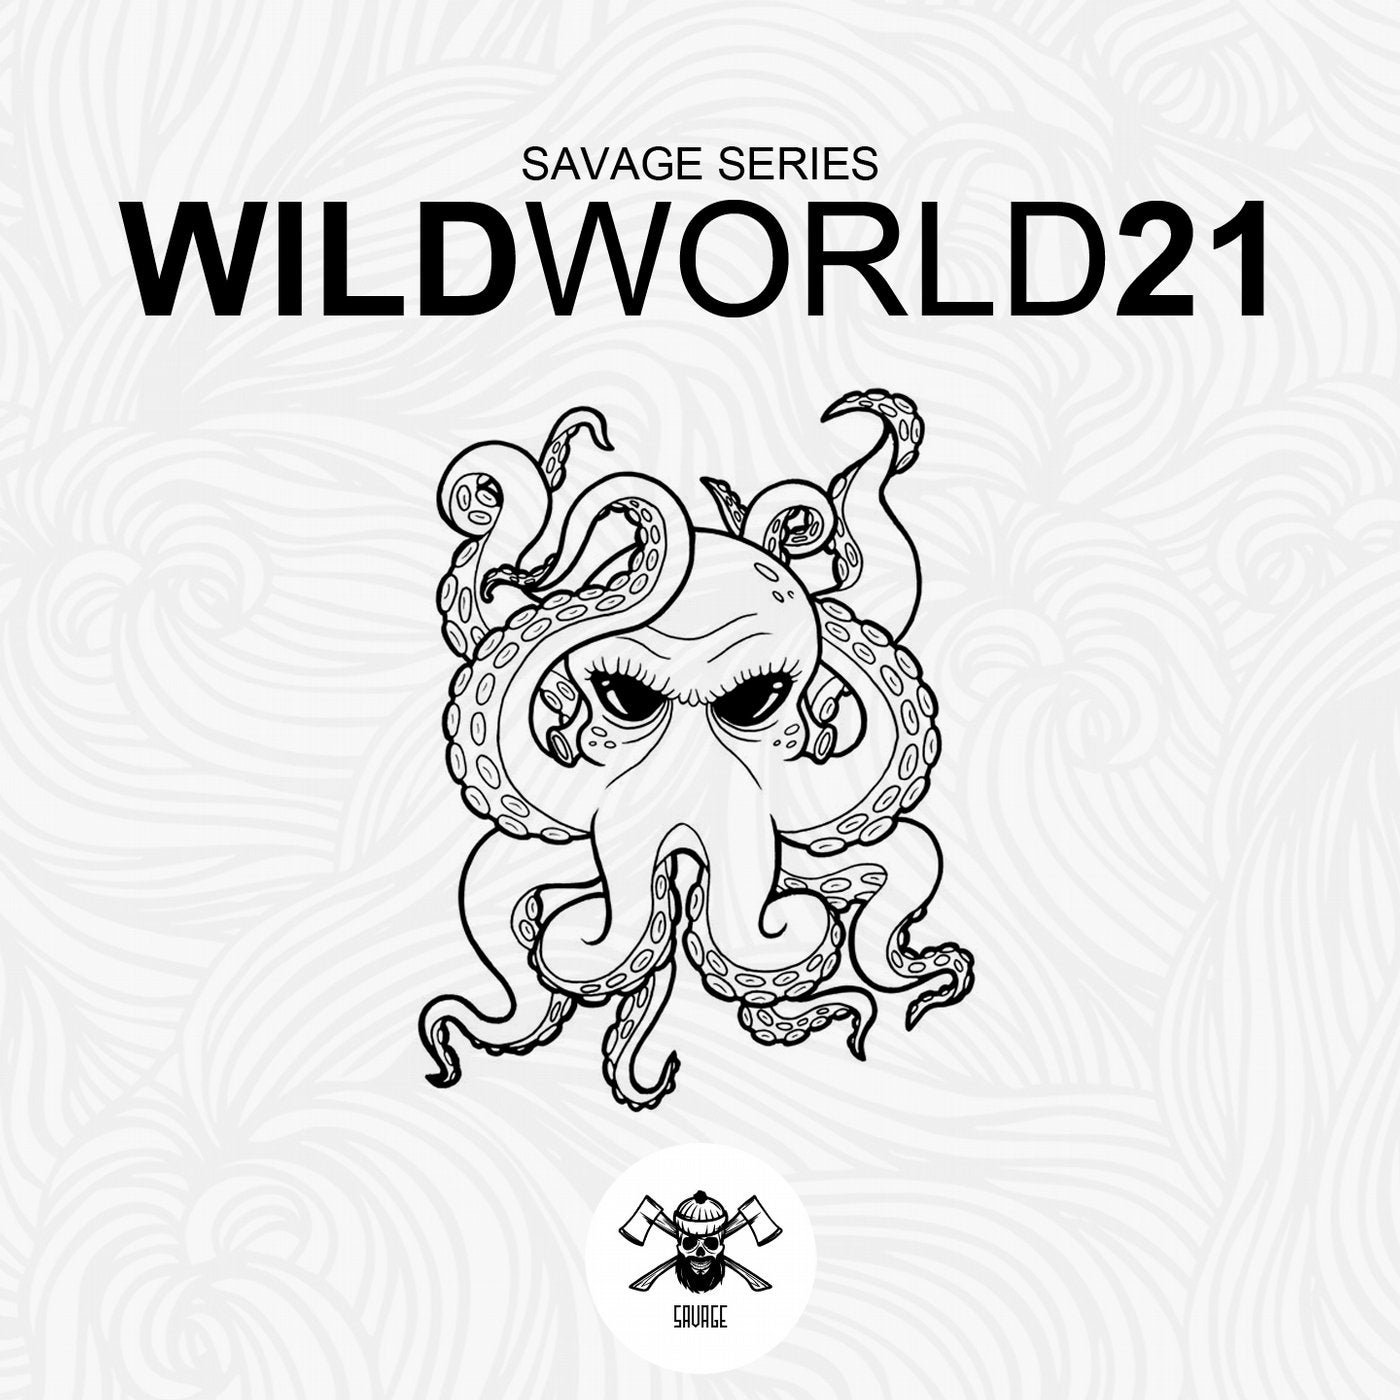 WildWorld21 (Savage Series)